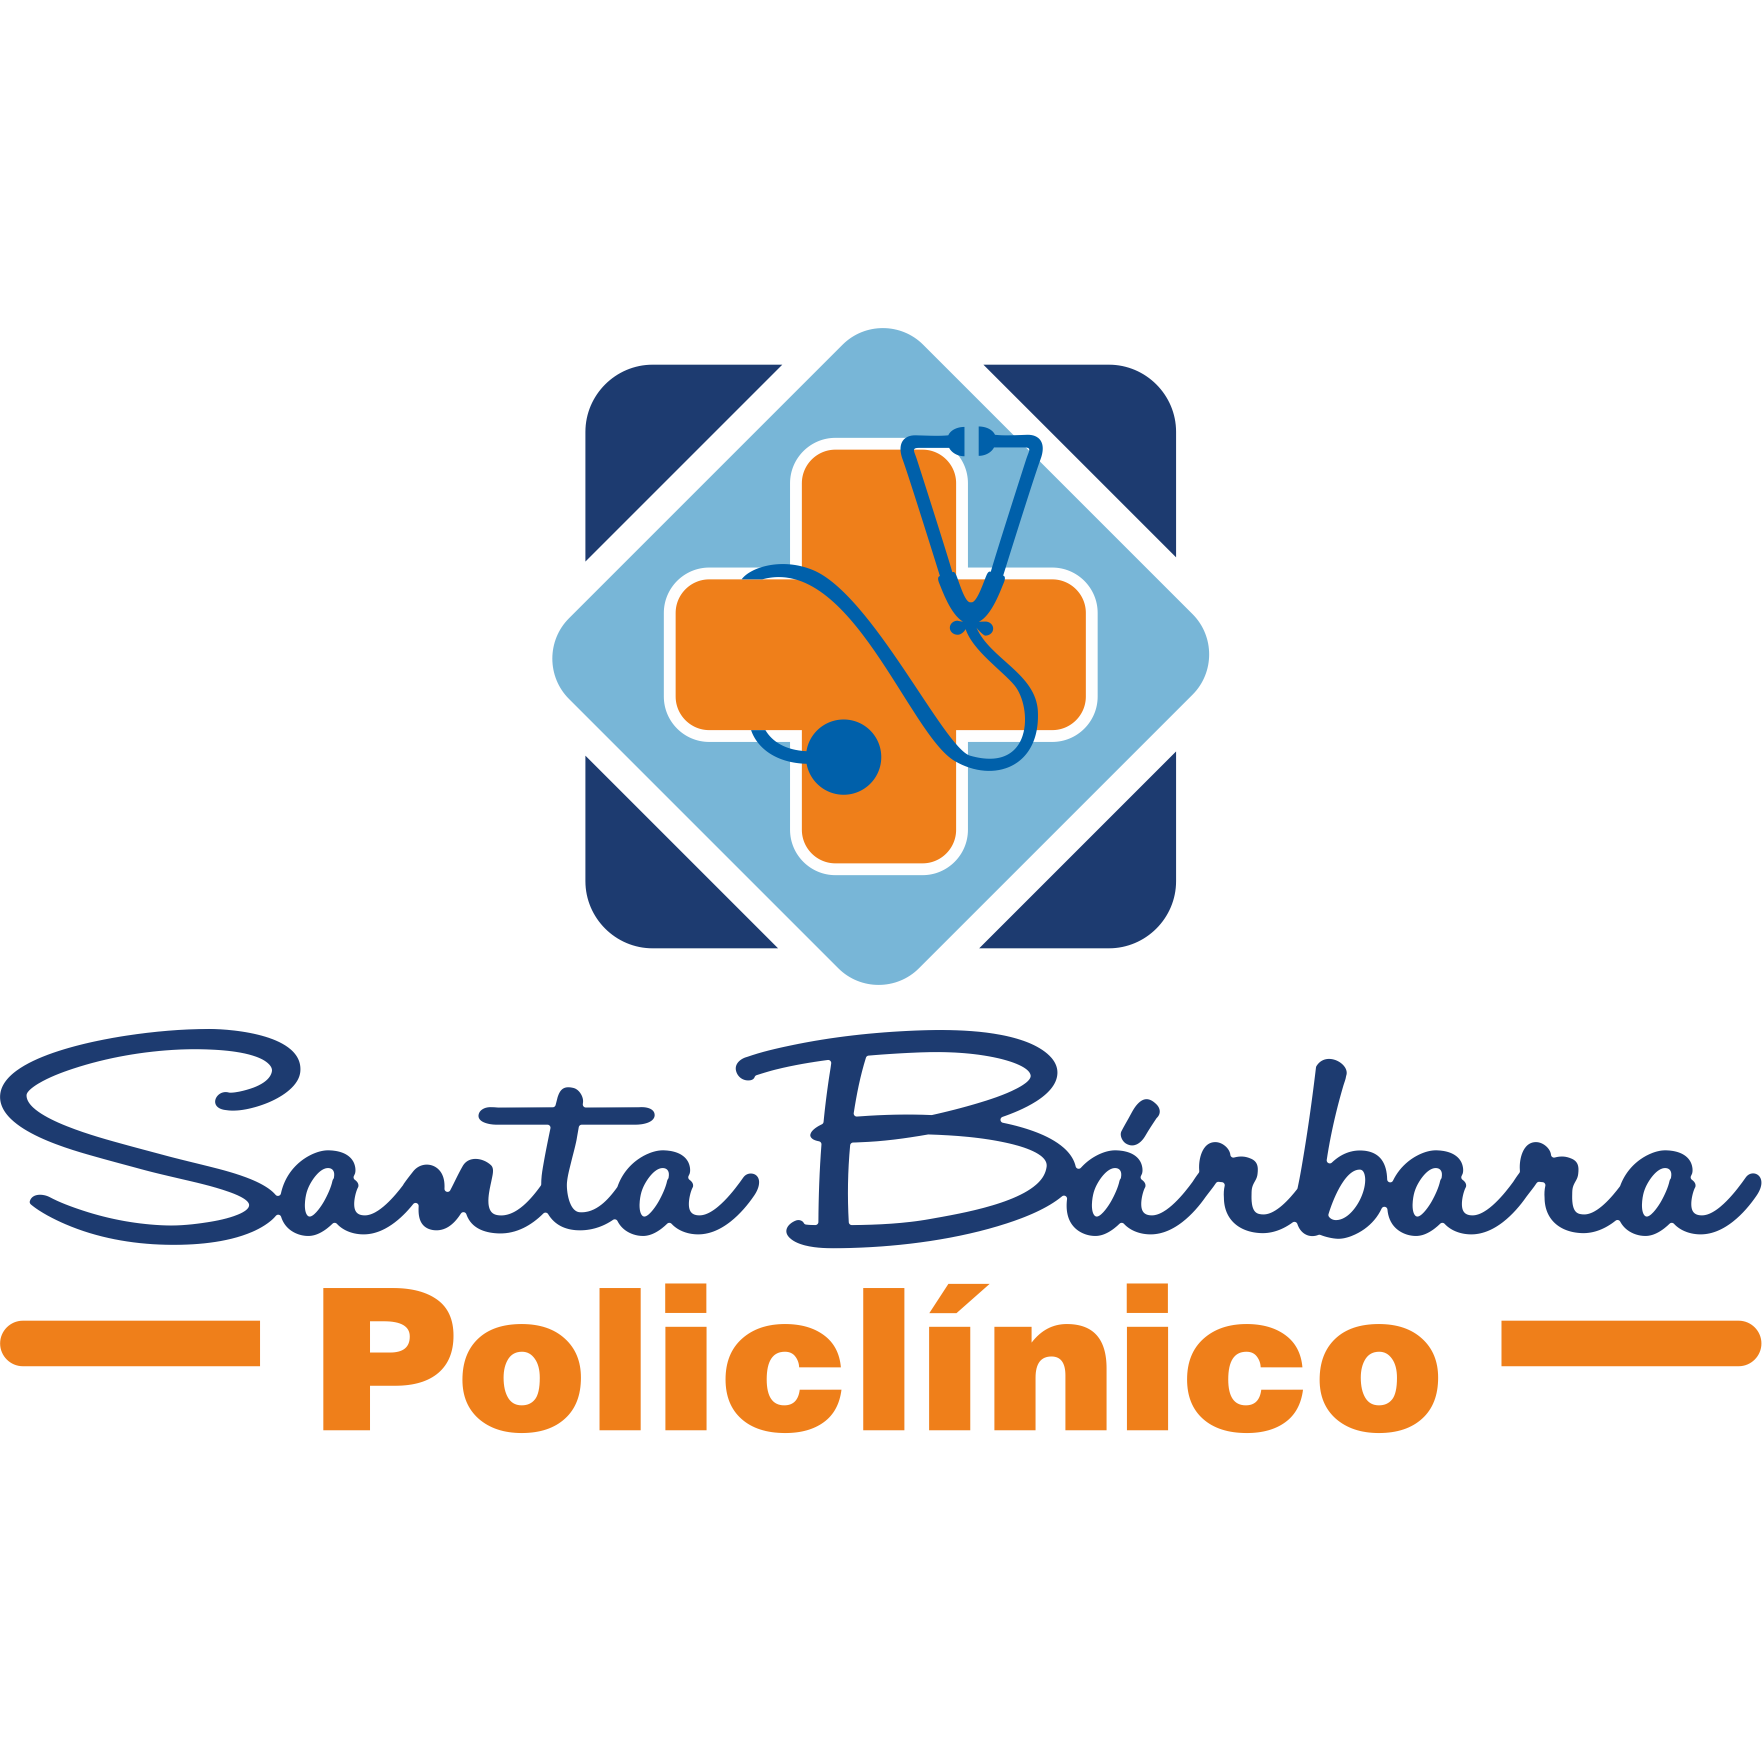 Policlínico Santa Barbara Logo